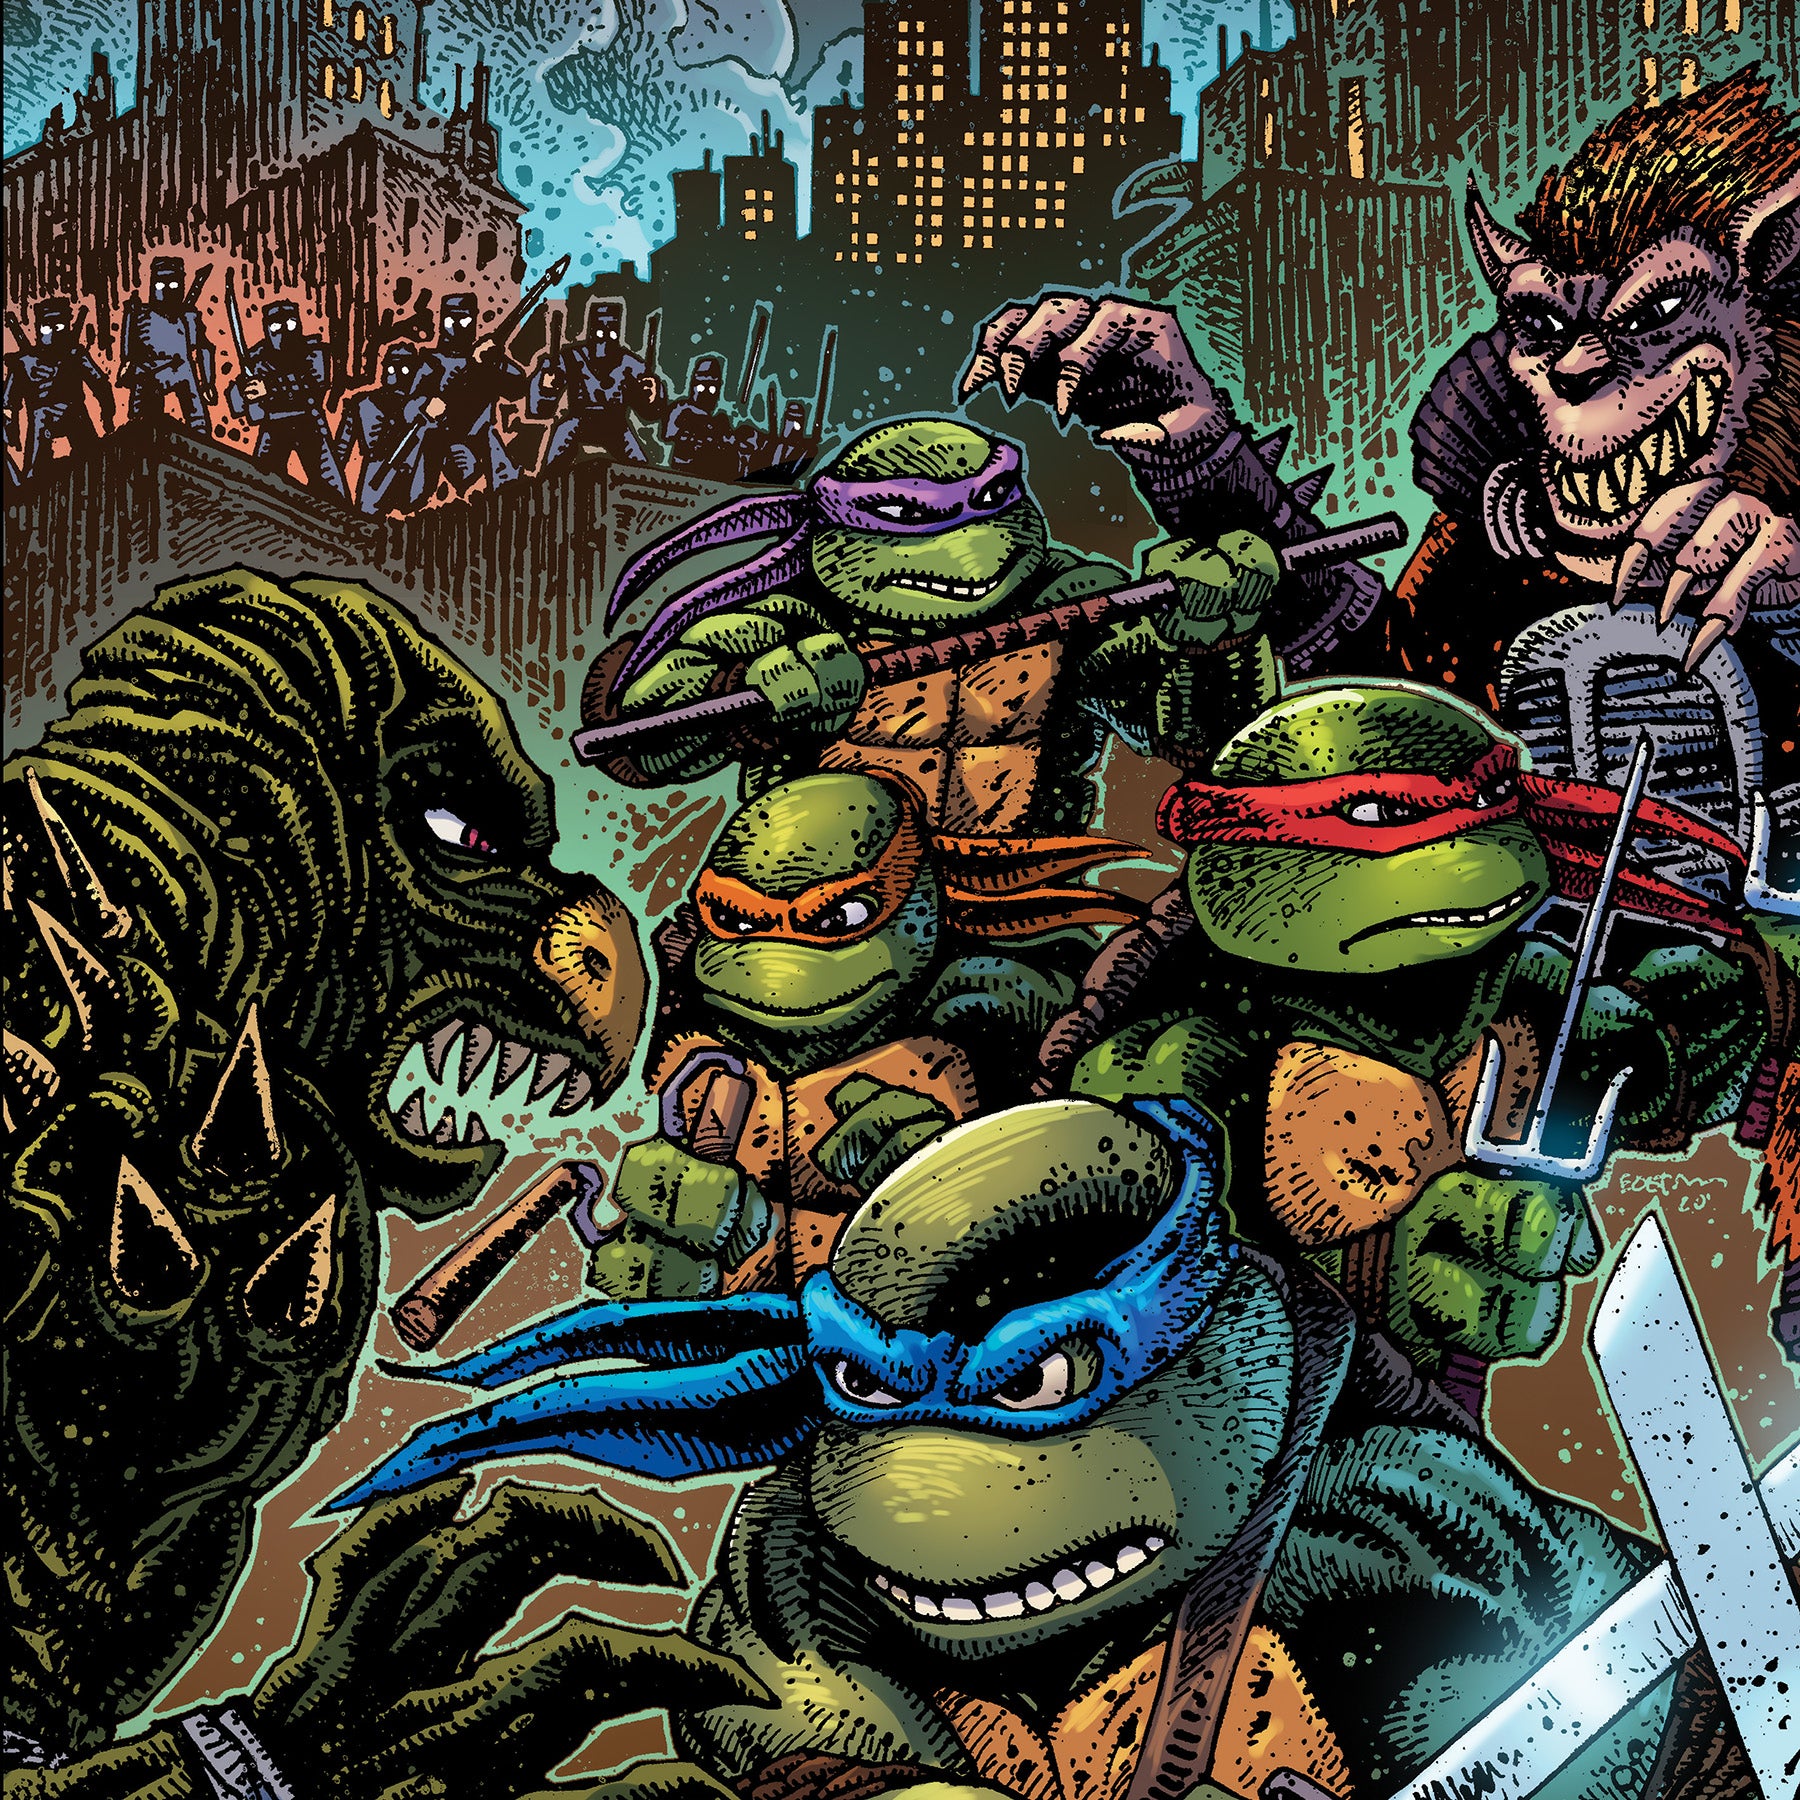 Teenage Mutant Ninja Turtles Part II: The Secret of the Ooze – Waxwork  Records